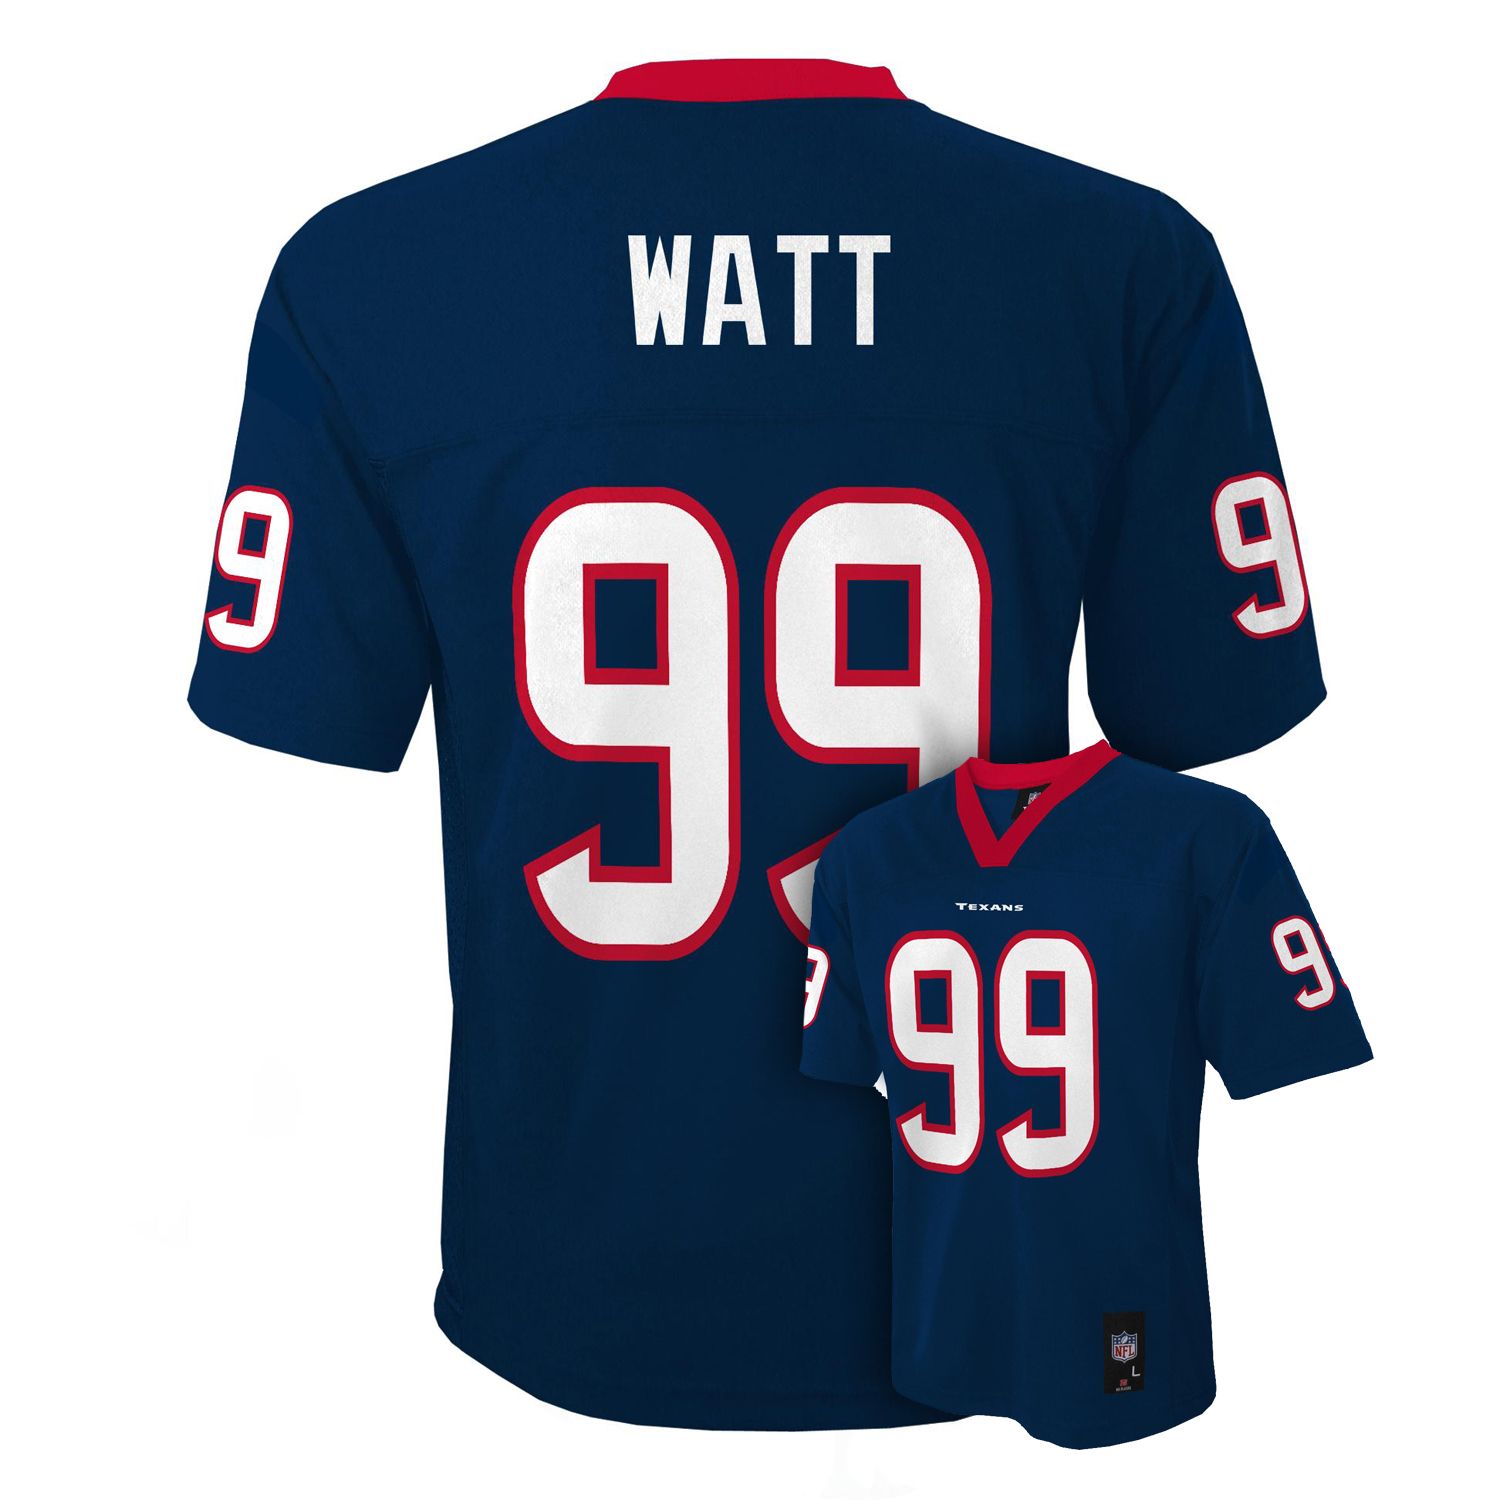 Houston Texans JJ Watt NFL Replica Jersey